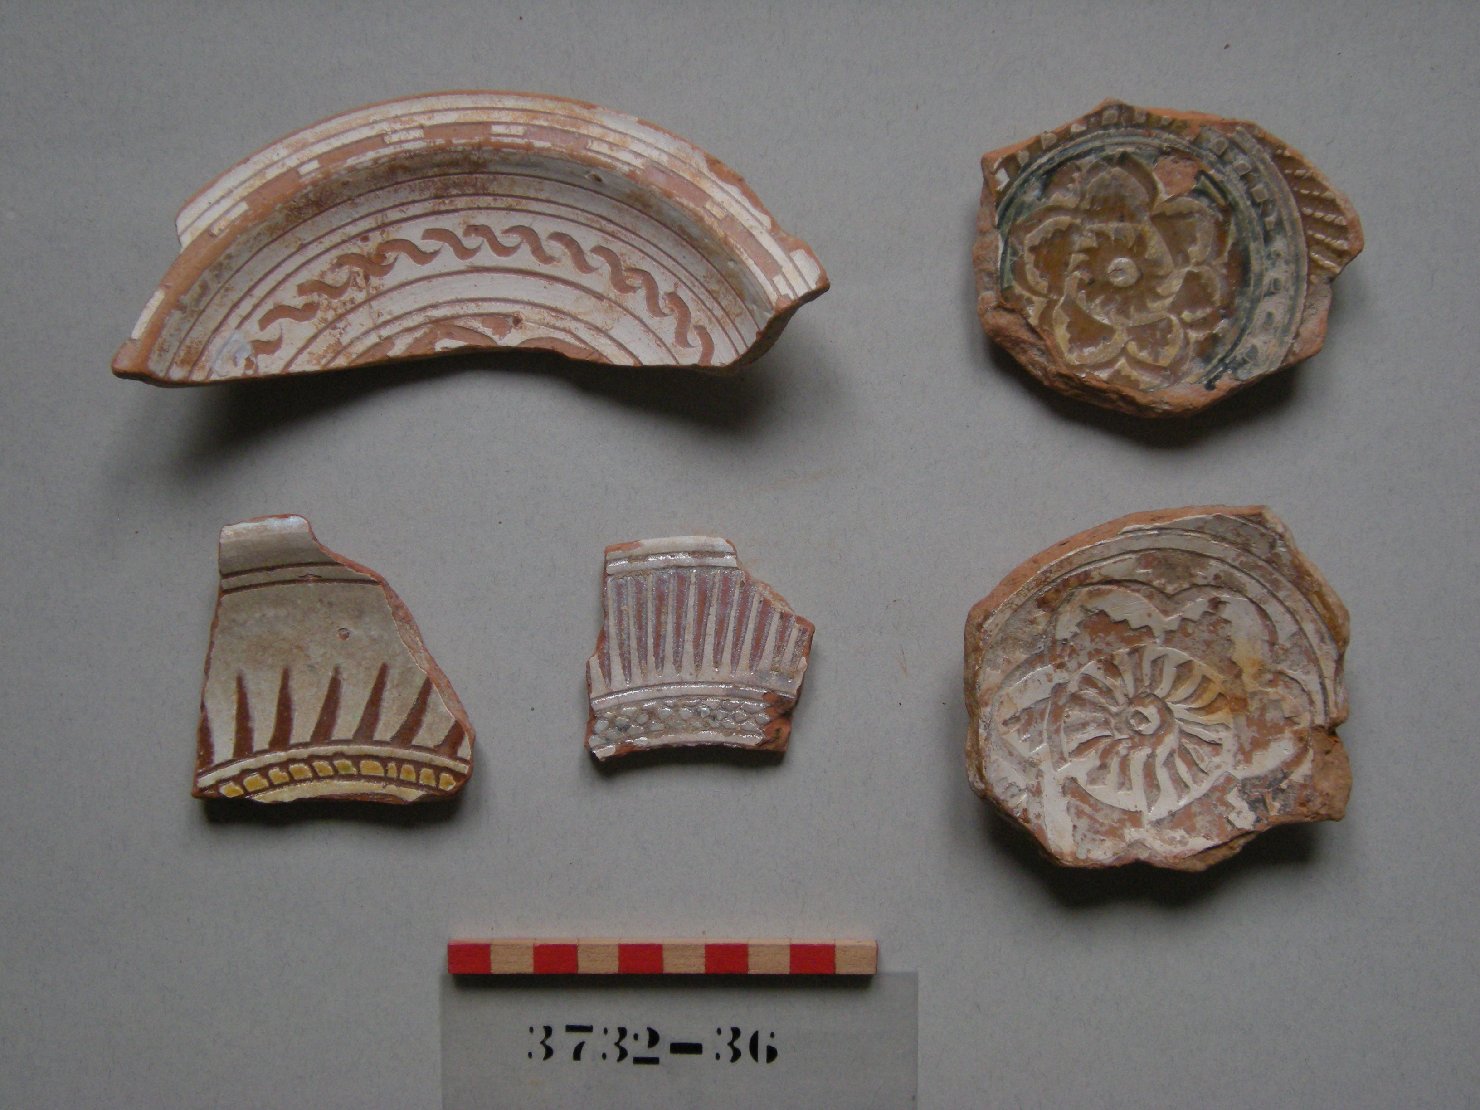 motivi decorativi geometrici e vegetali (piatto, frammento) - ambito veneziano (sec. XVI)